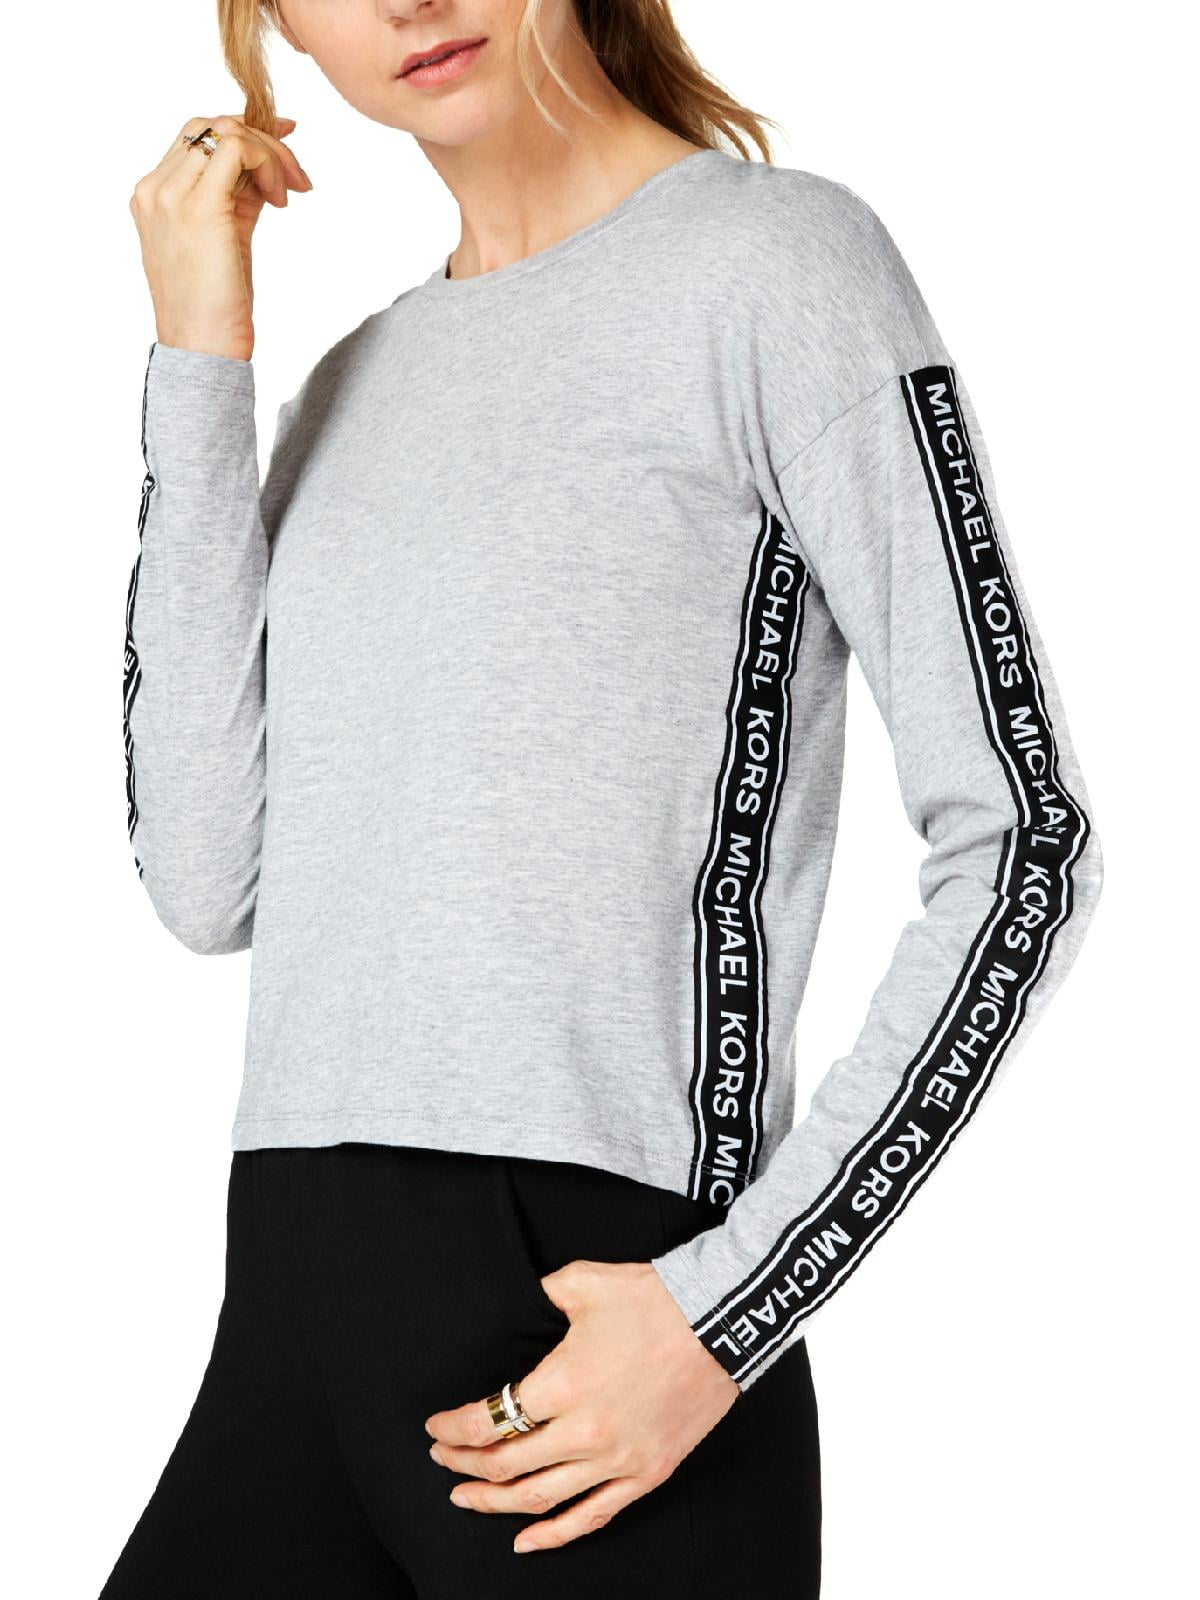 Michael Kors - Michael Kors Womens Tape Crewneck Tee Logo T-Shirt ...